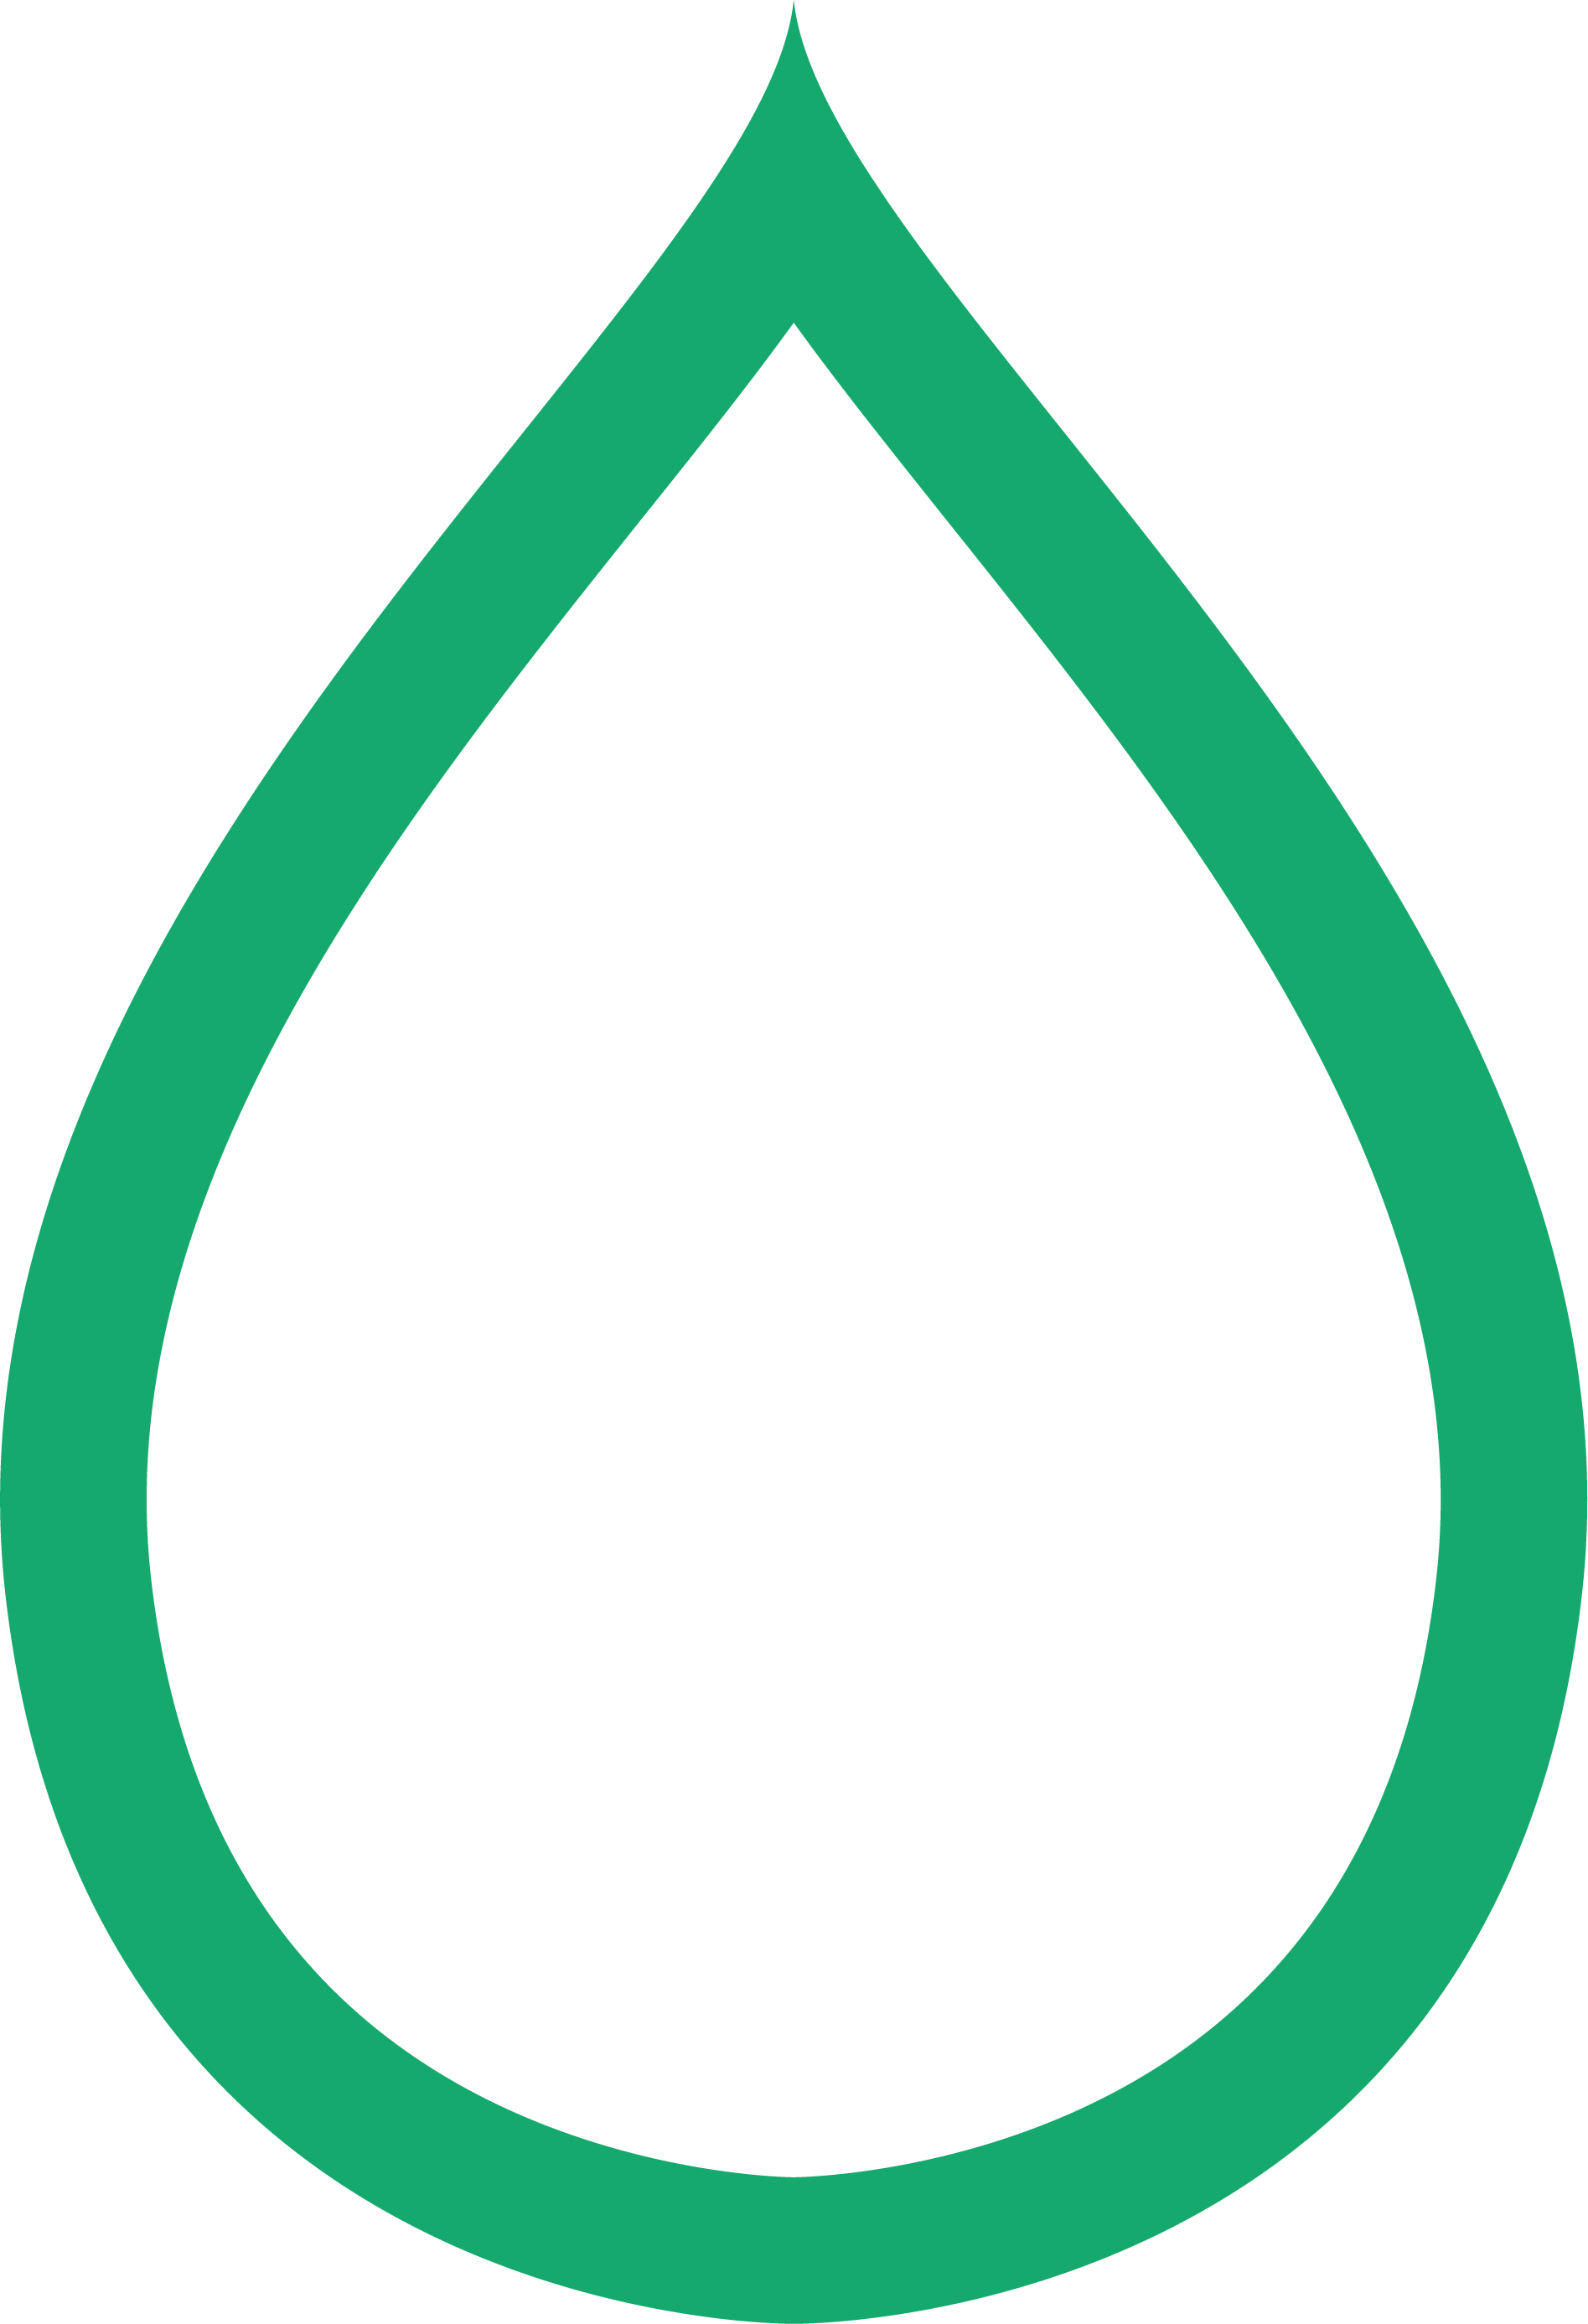 Oasis Preferred Maintenance Logo